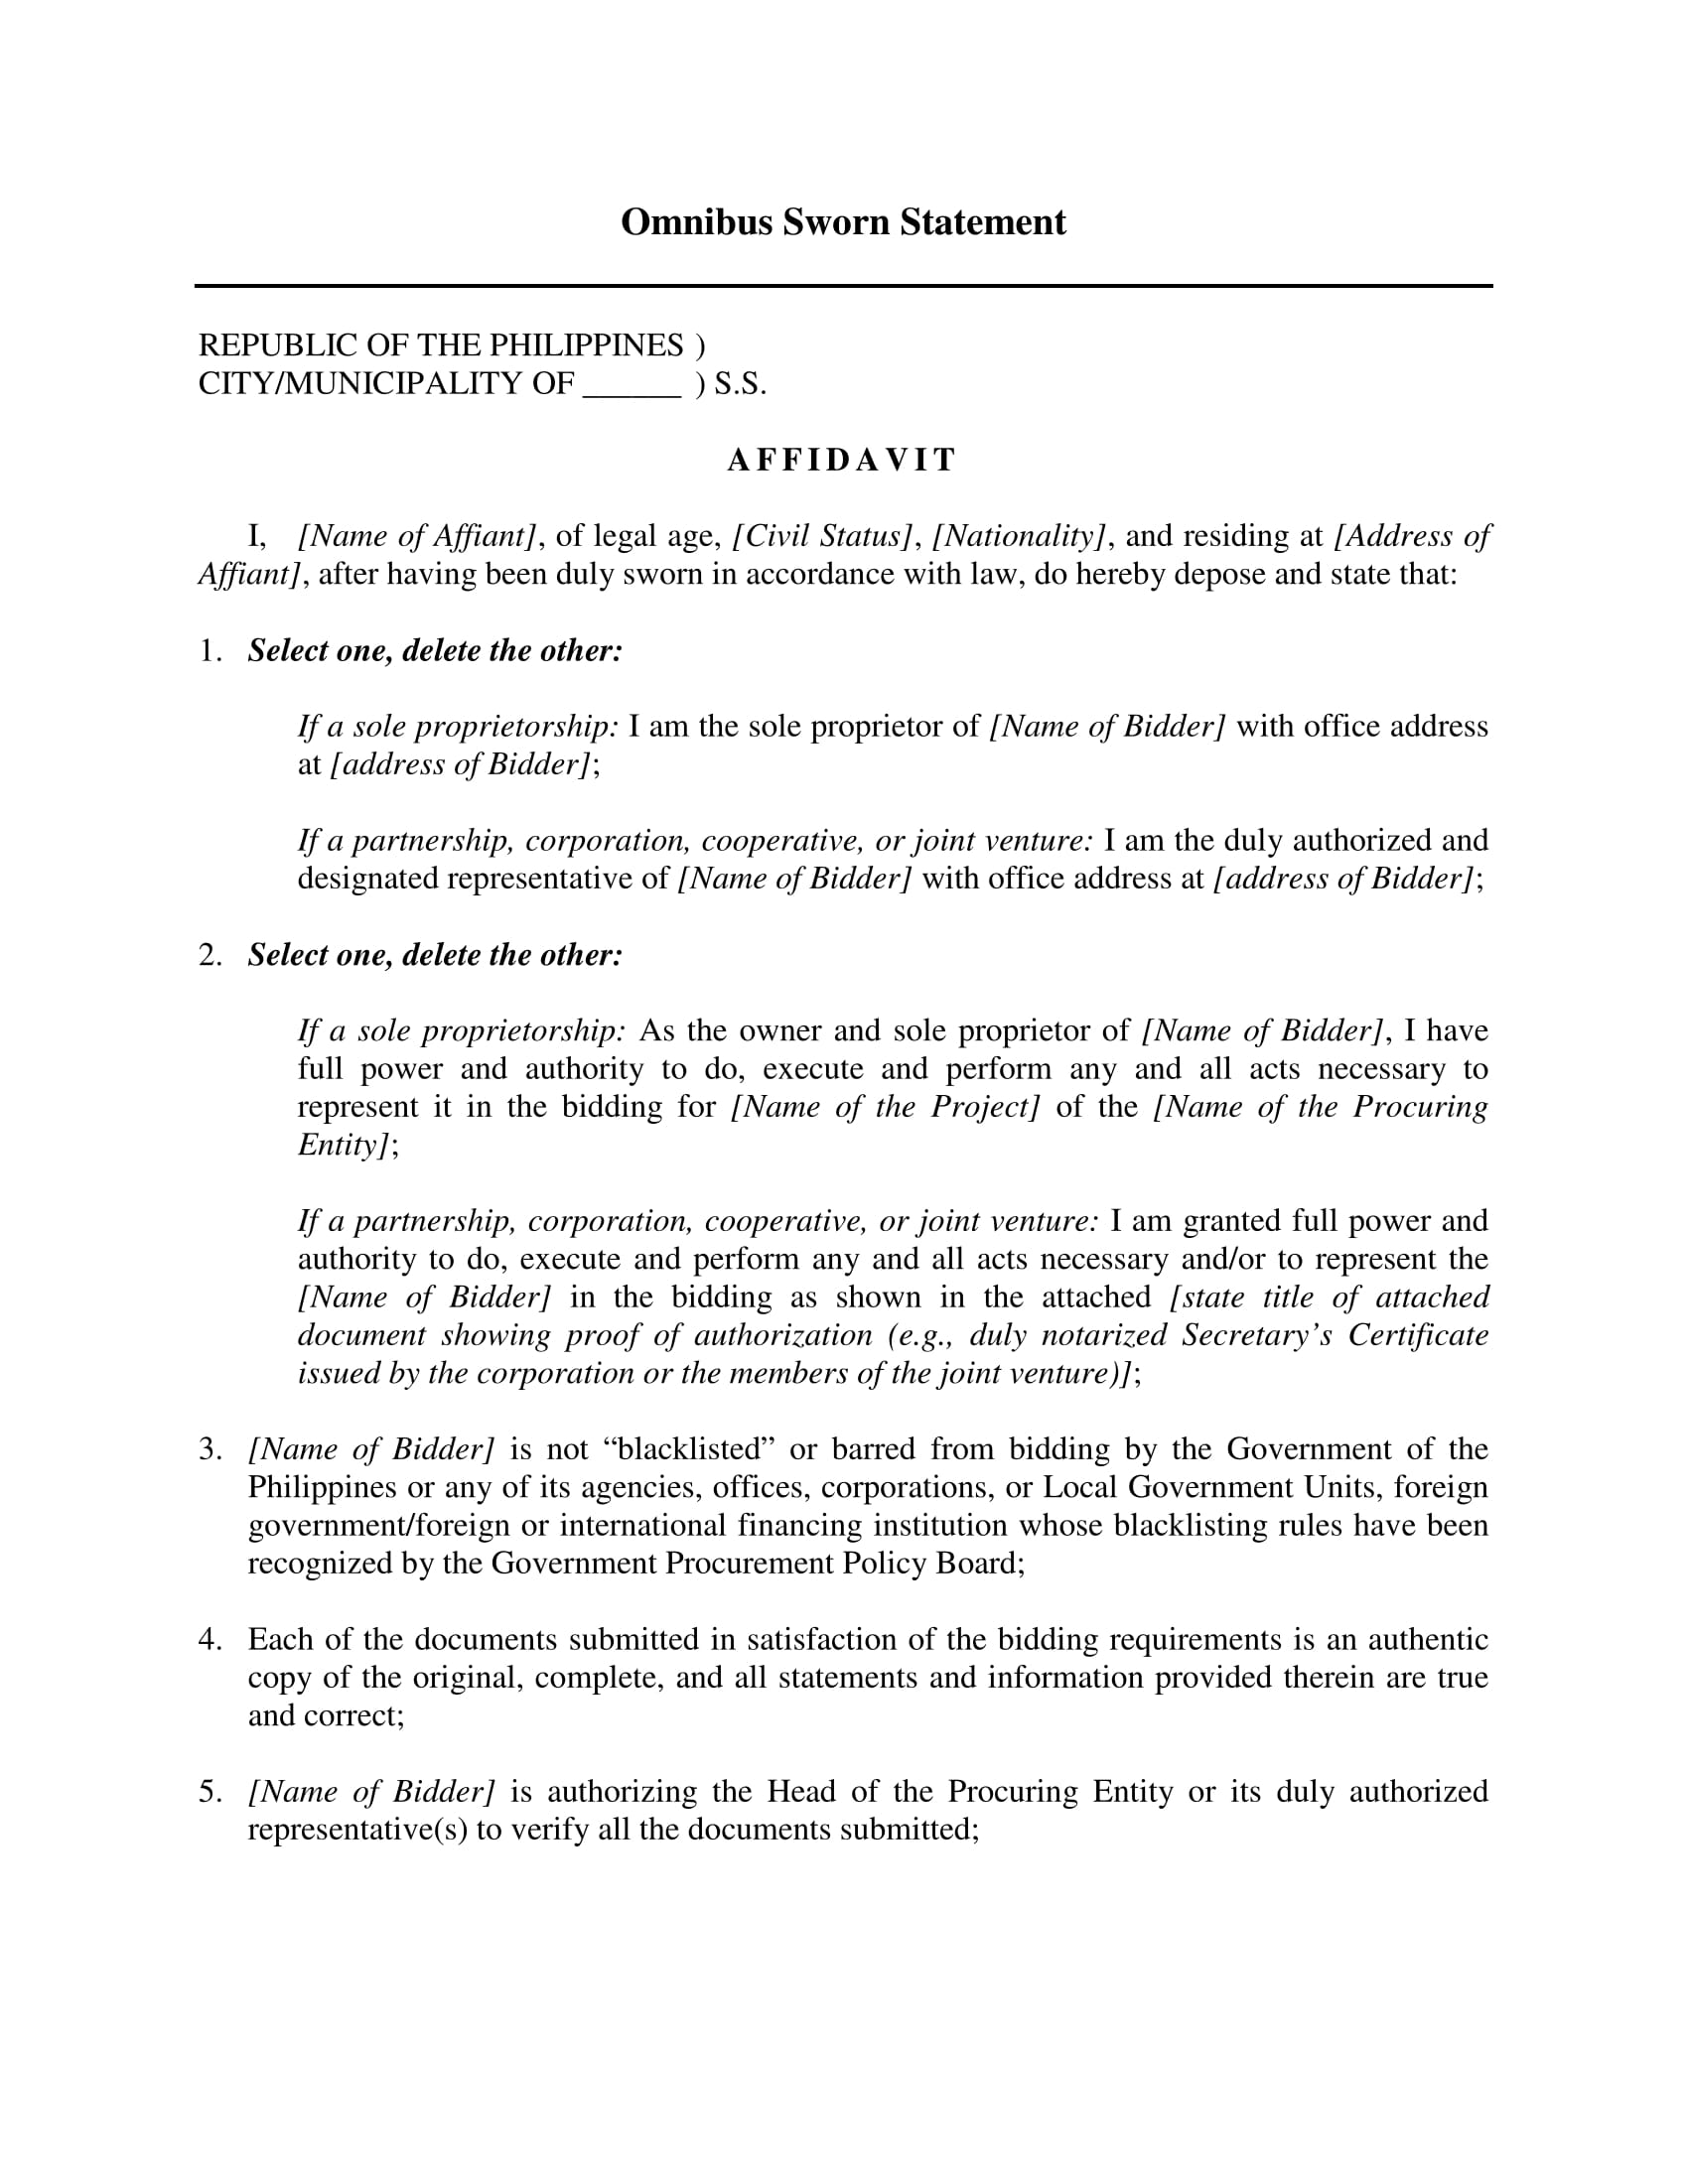 official omnibus sworn statement form 1